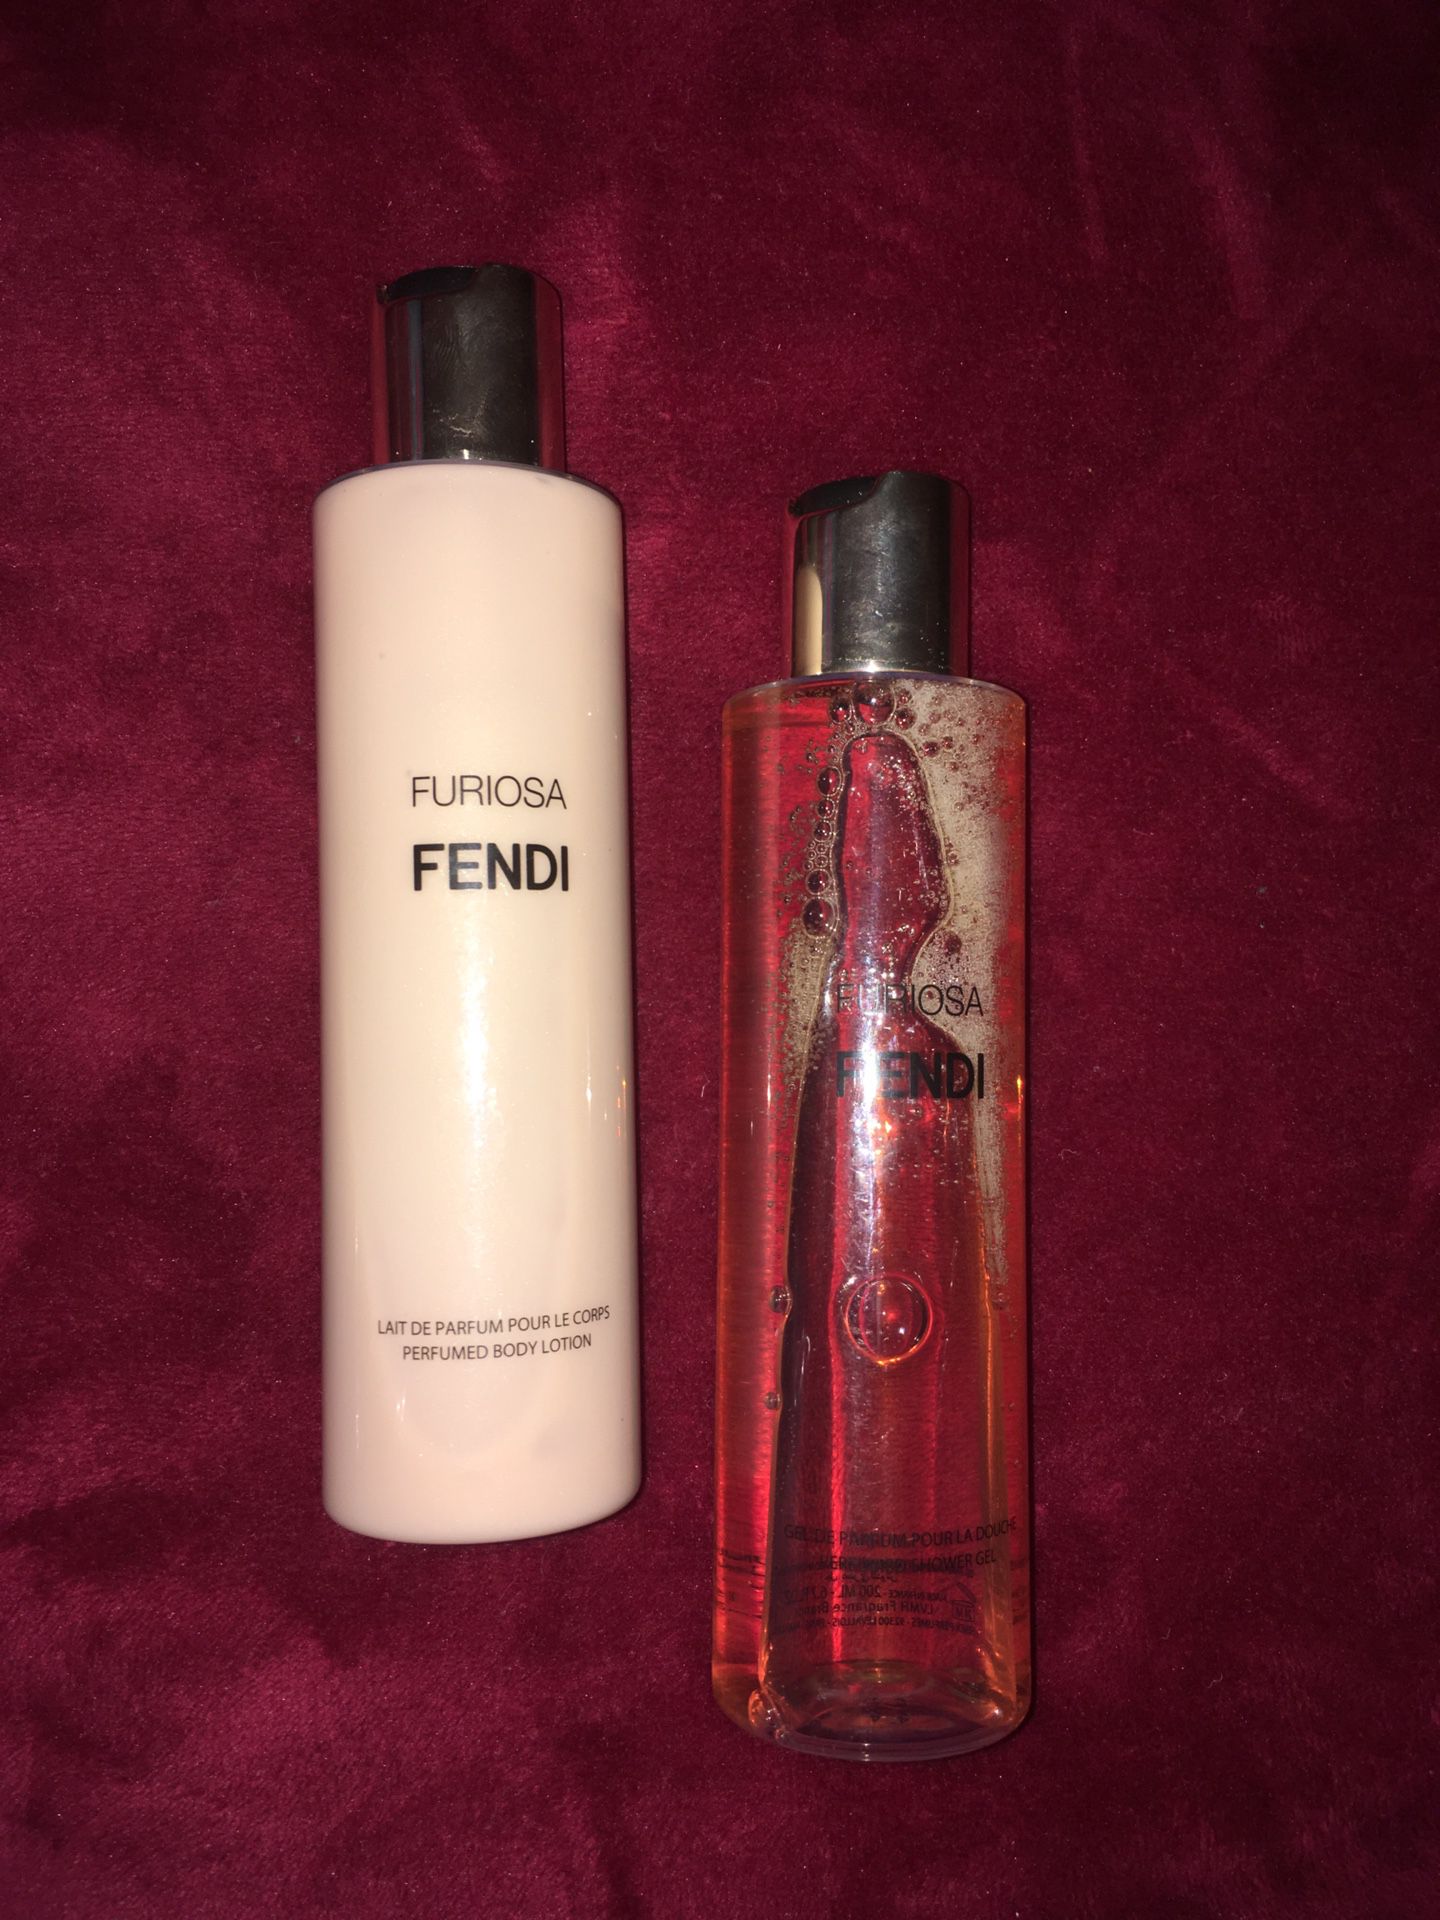 Fendi (Furiosa) new lotion and shower gel set